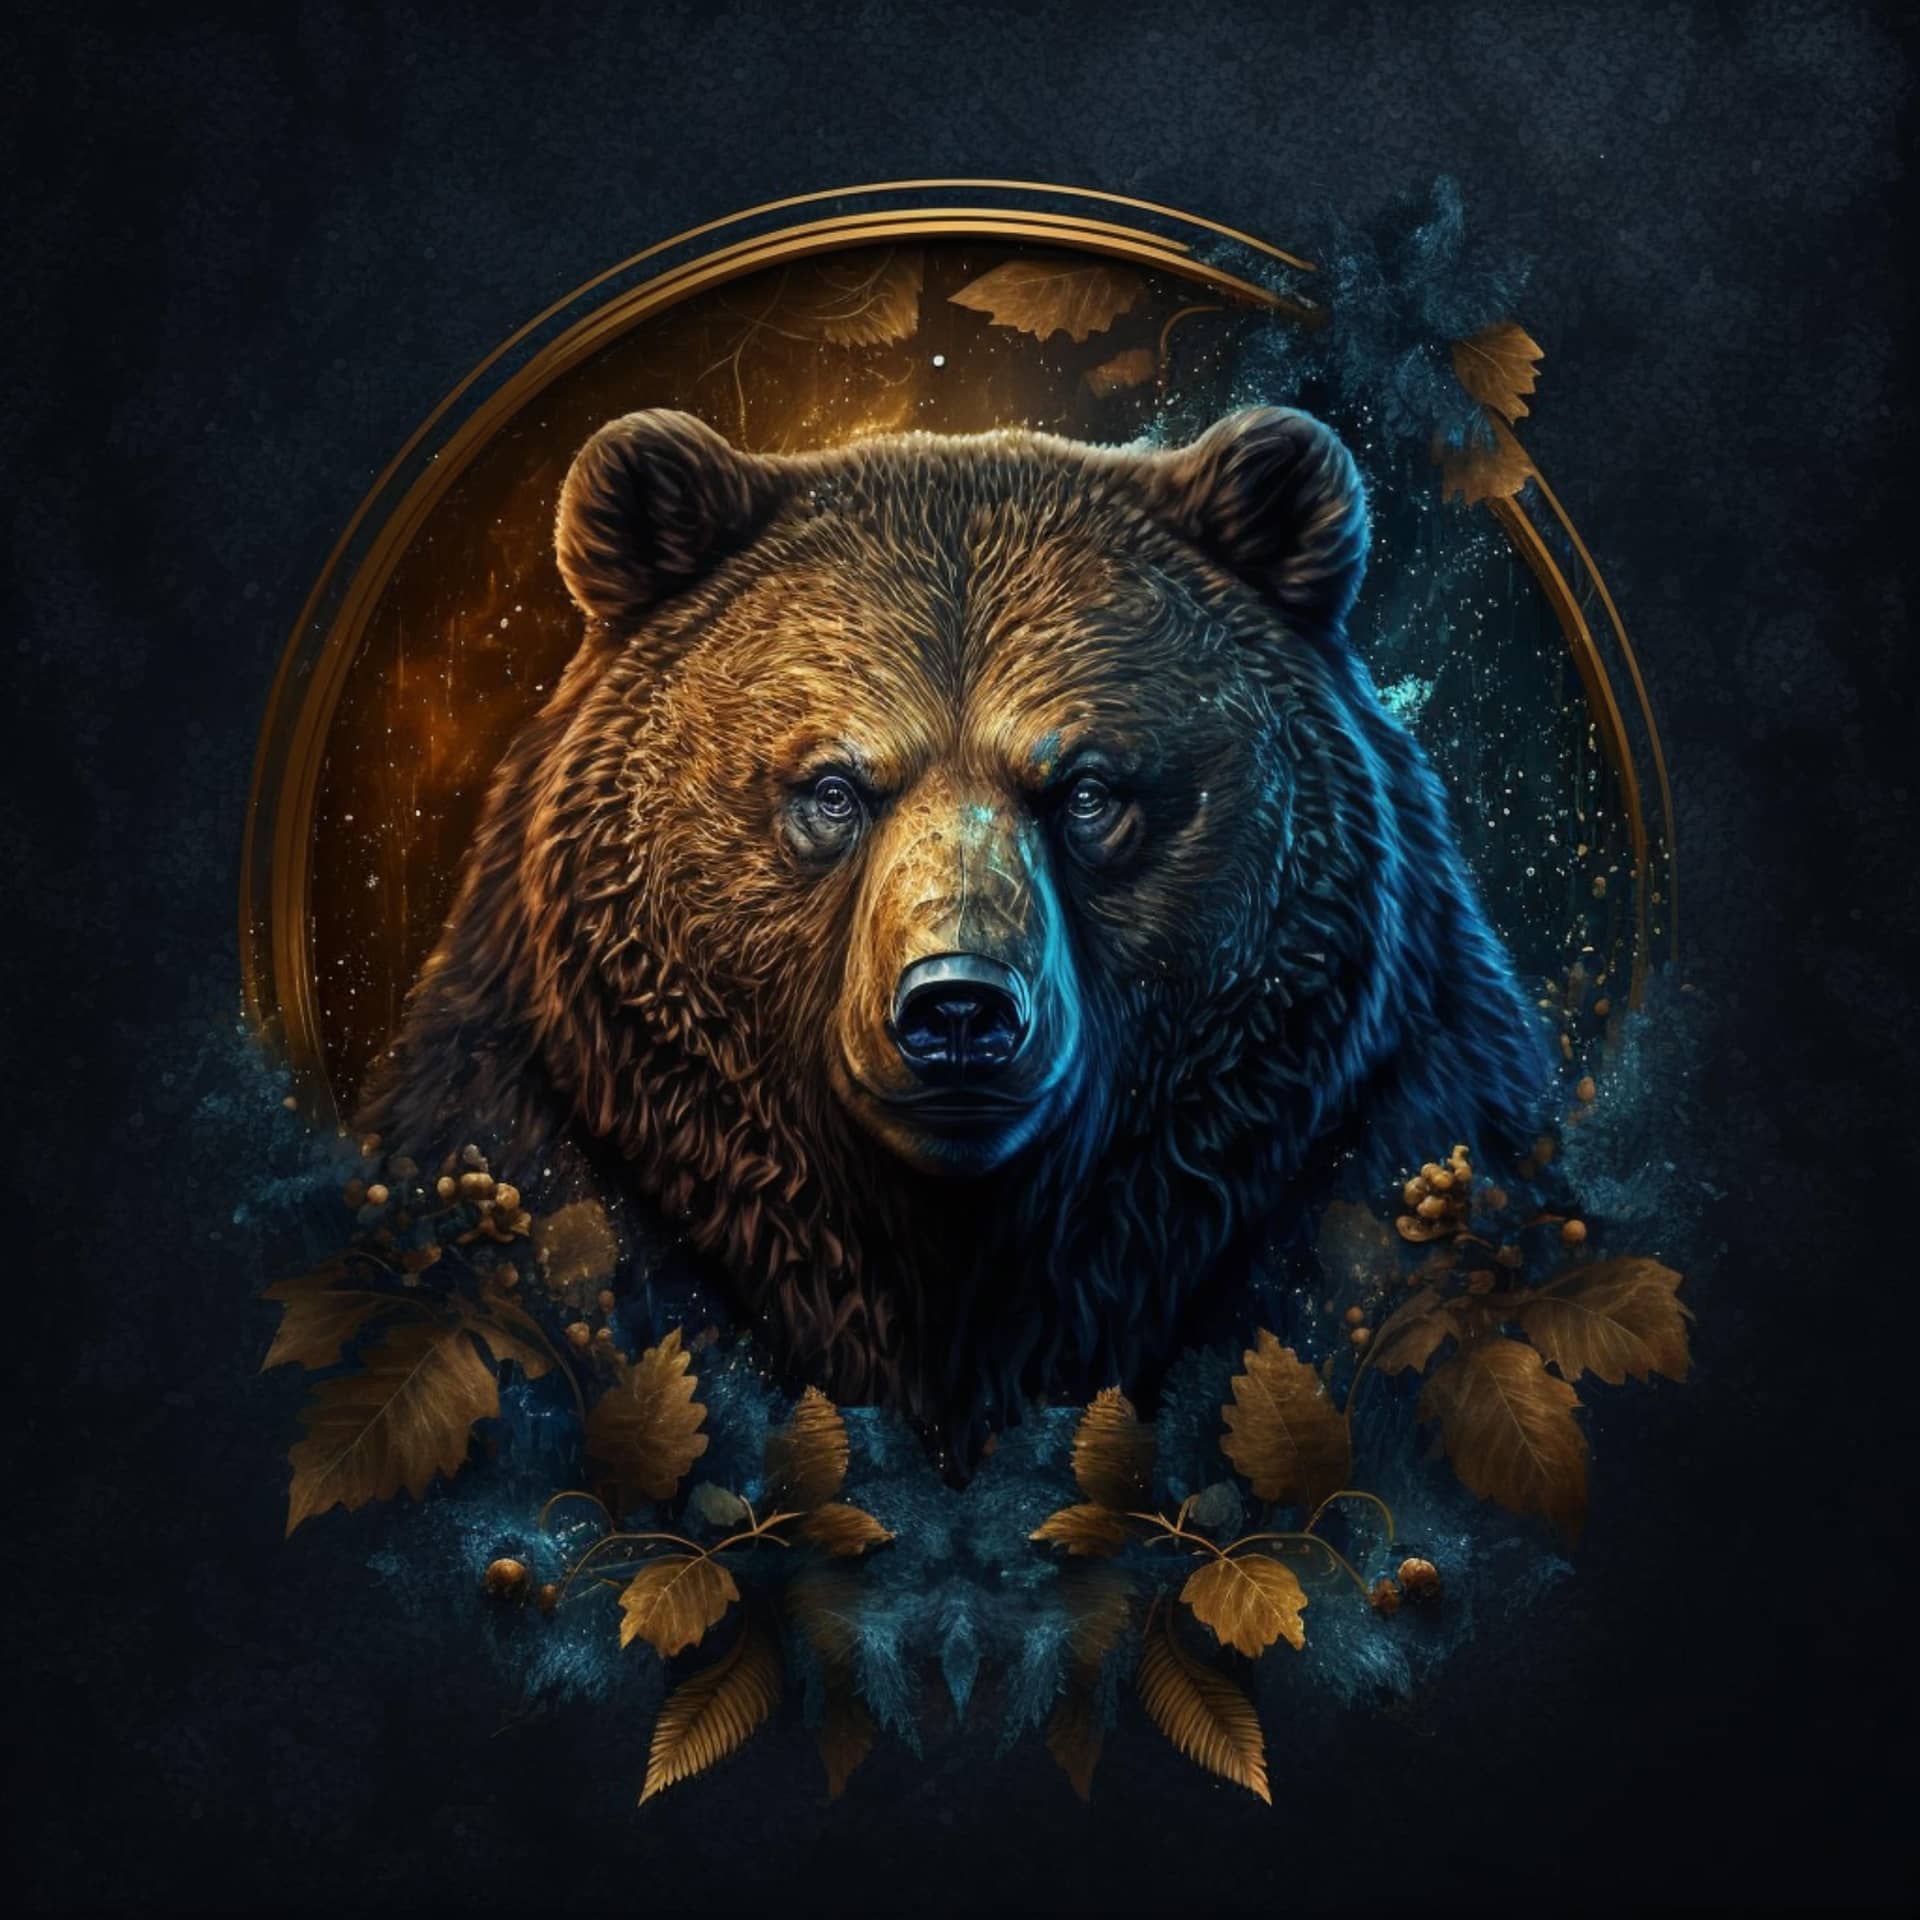 Cool bear illustration design nice picture